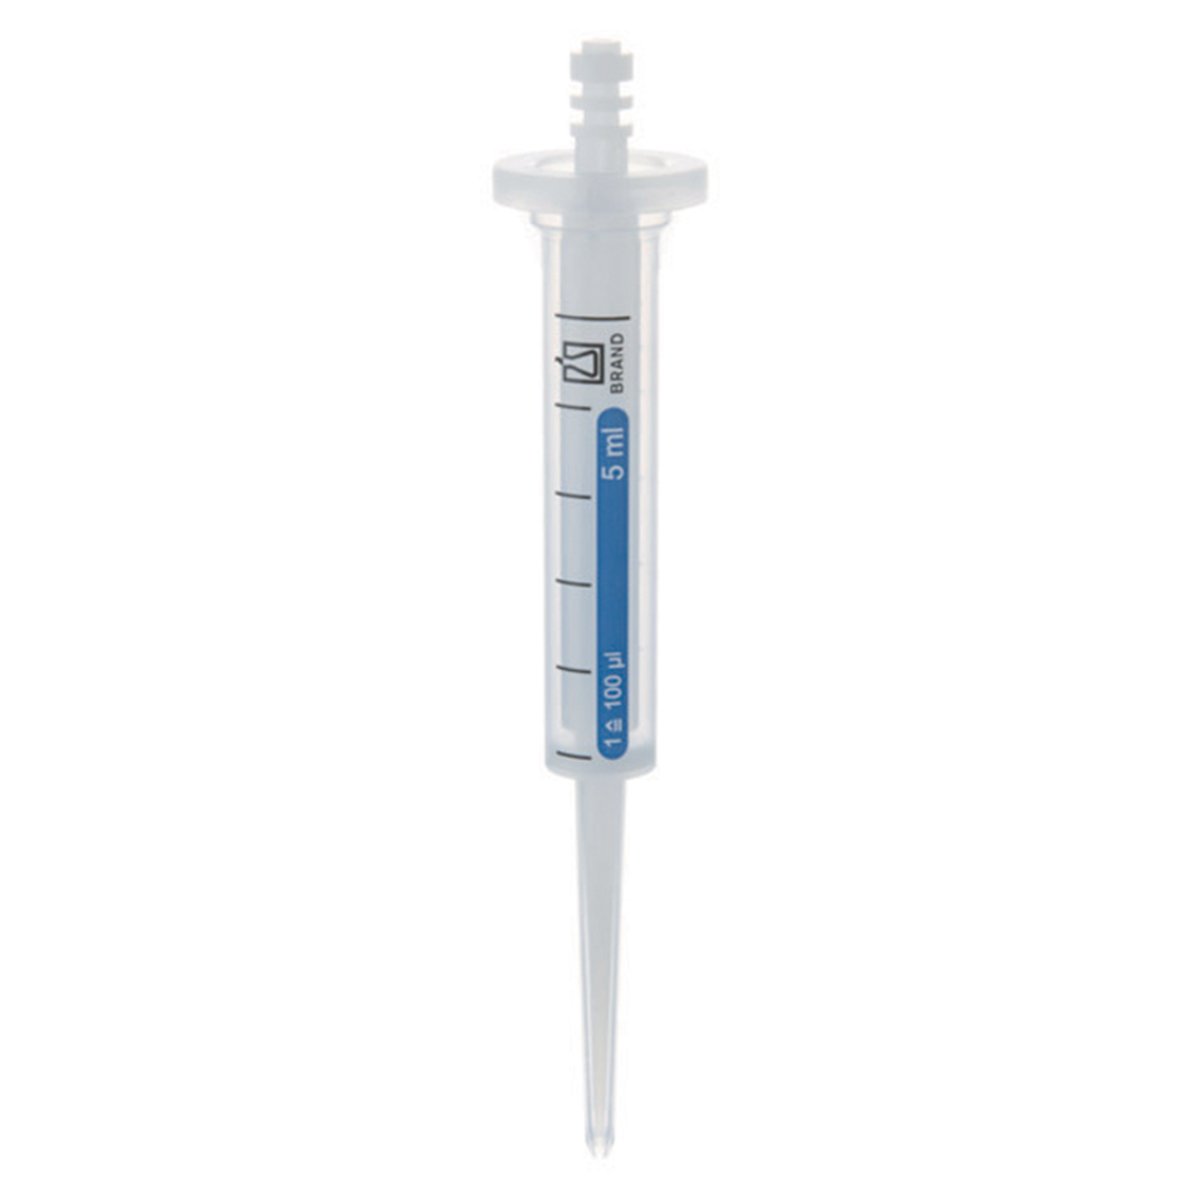 BrandTech BRAND PD-Tip II Syringe Tips - Non Sterile 5mL (Pack of 100)